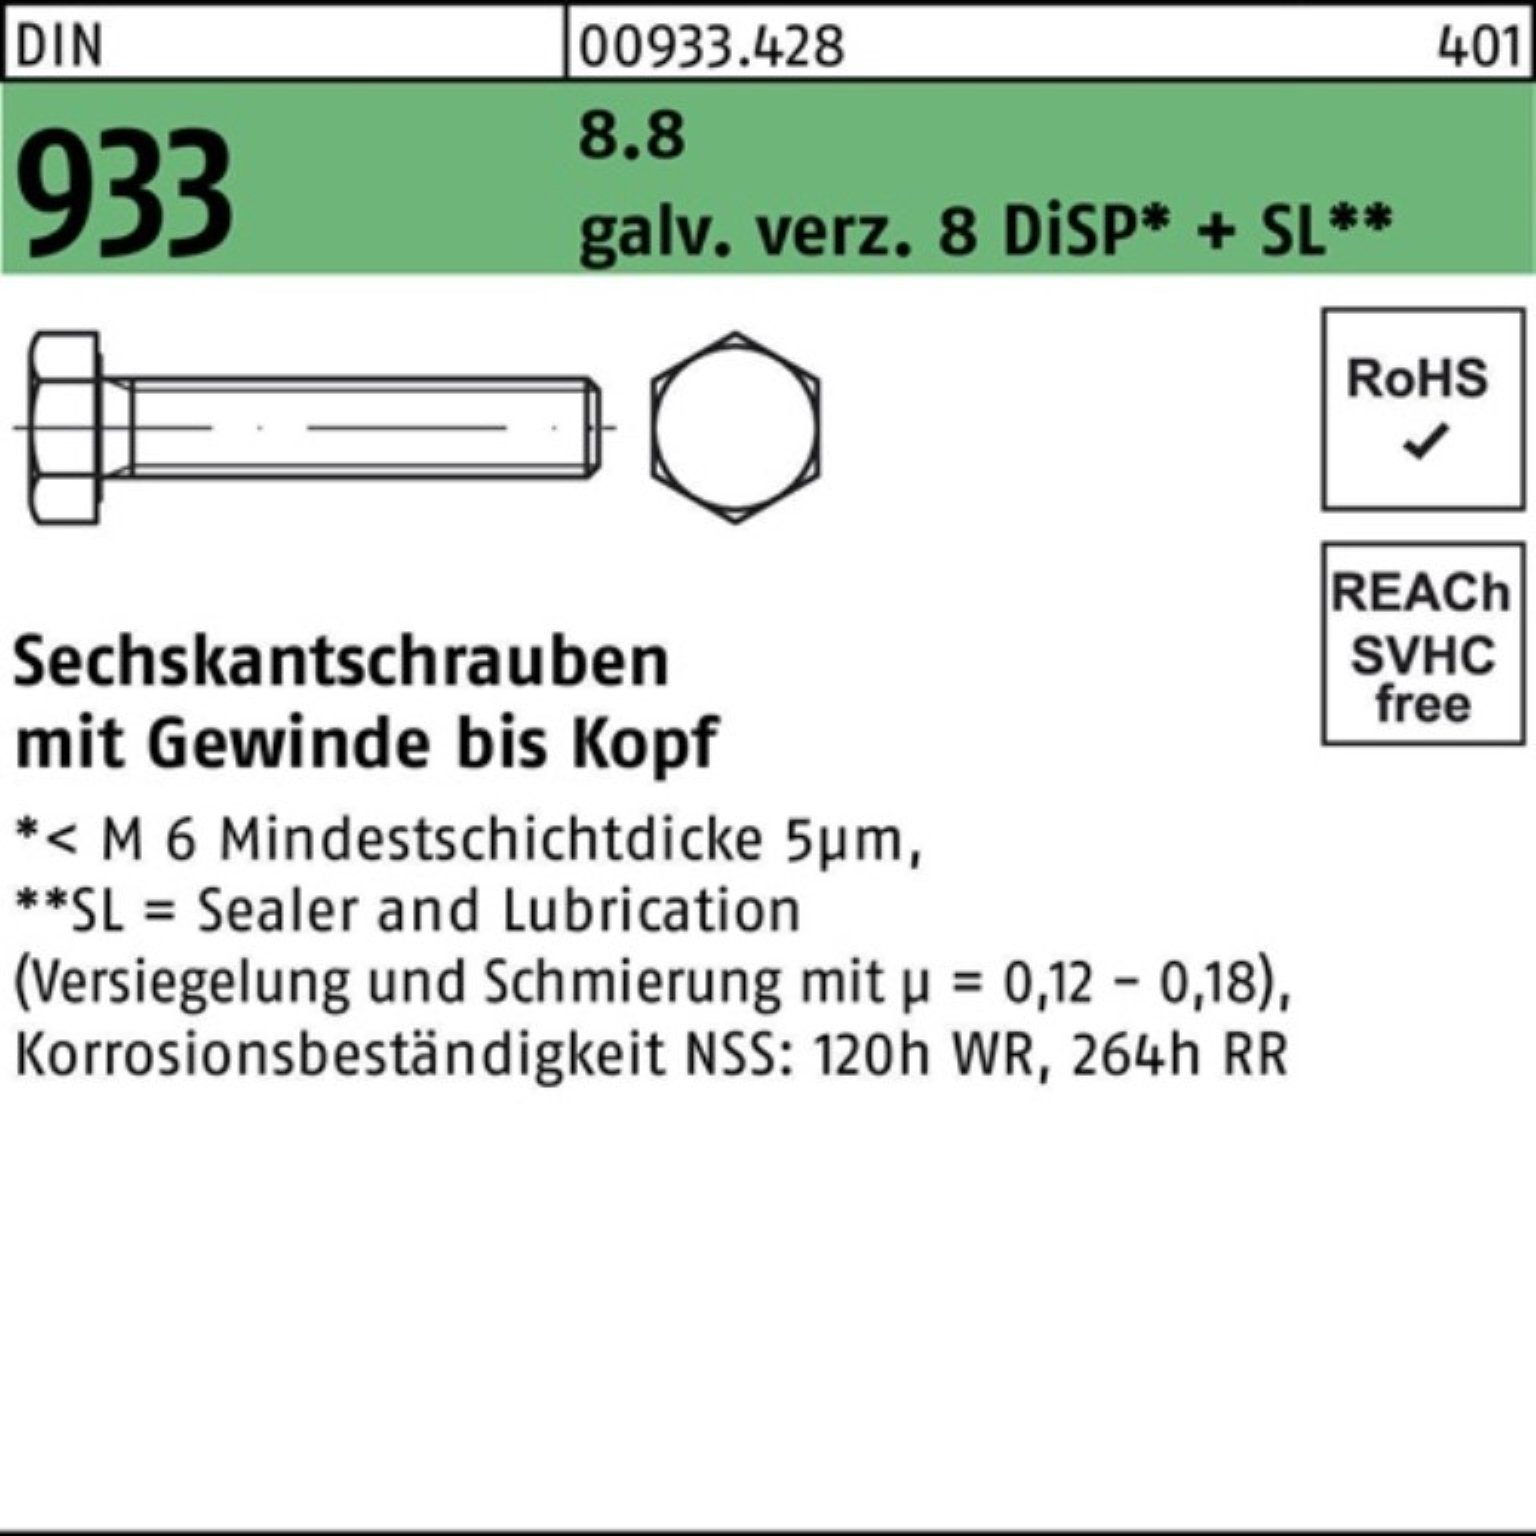 Reyher Sechskantschraube 100er Pack Sechskantschraube DIN 933 VG M16x 110 8.8 gal Zn 8 DiSP + S